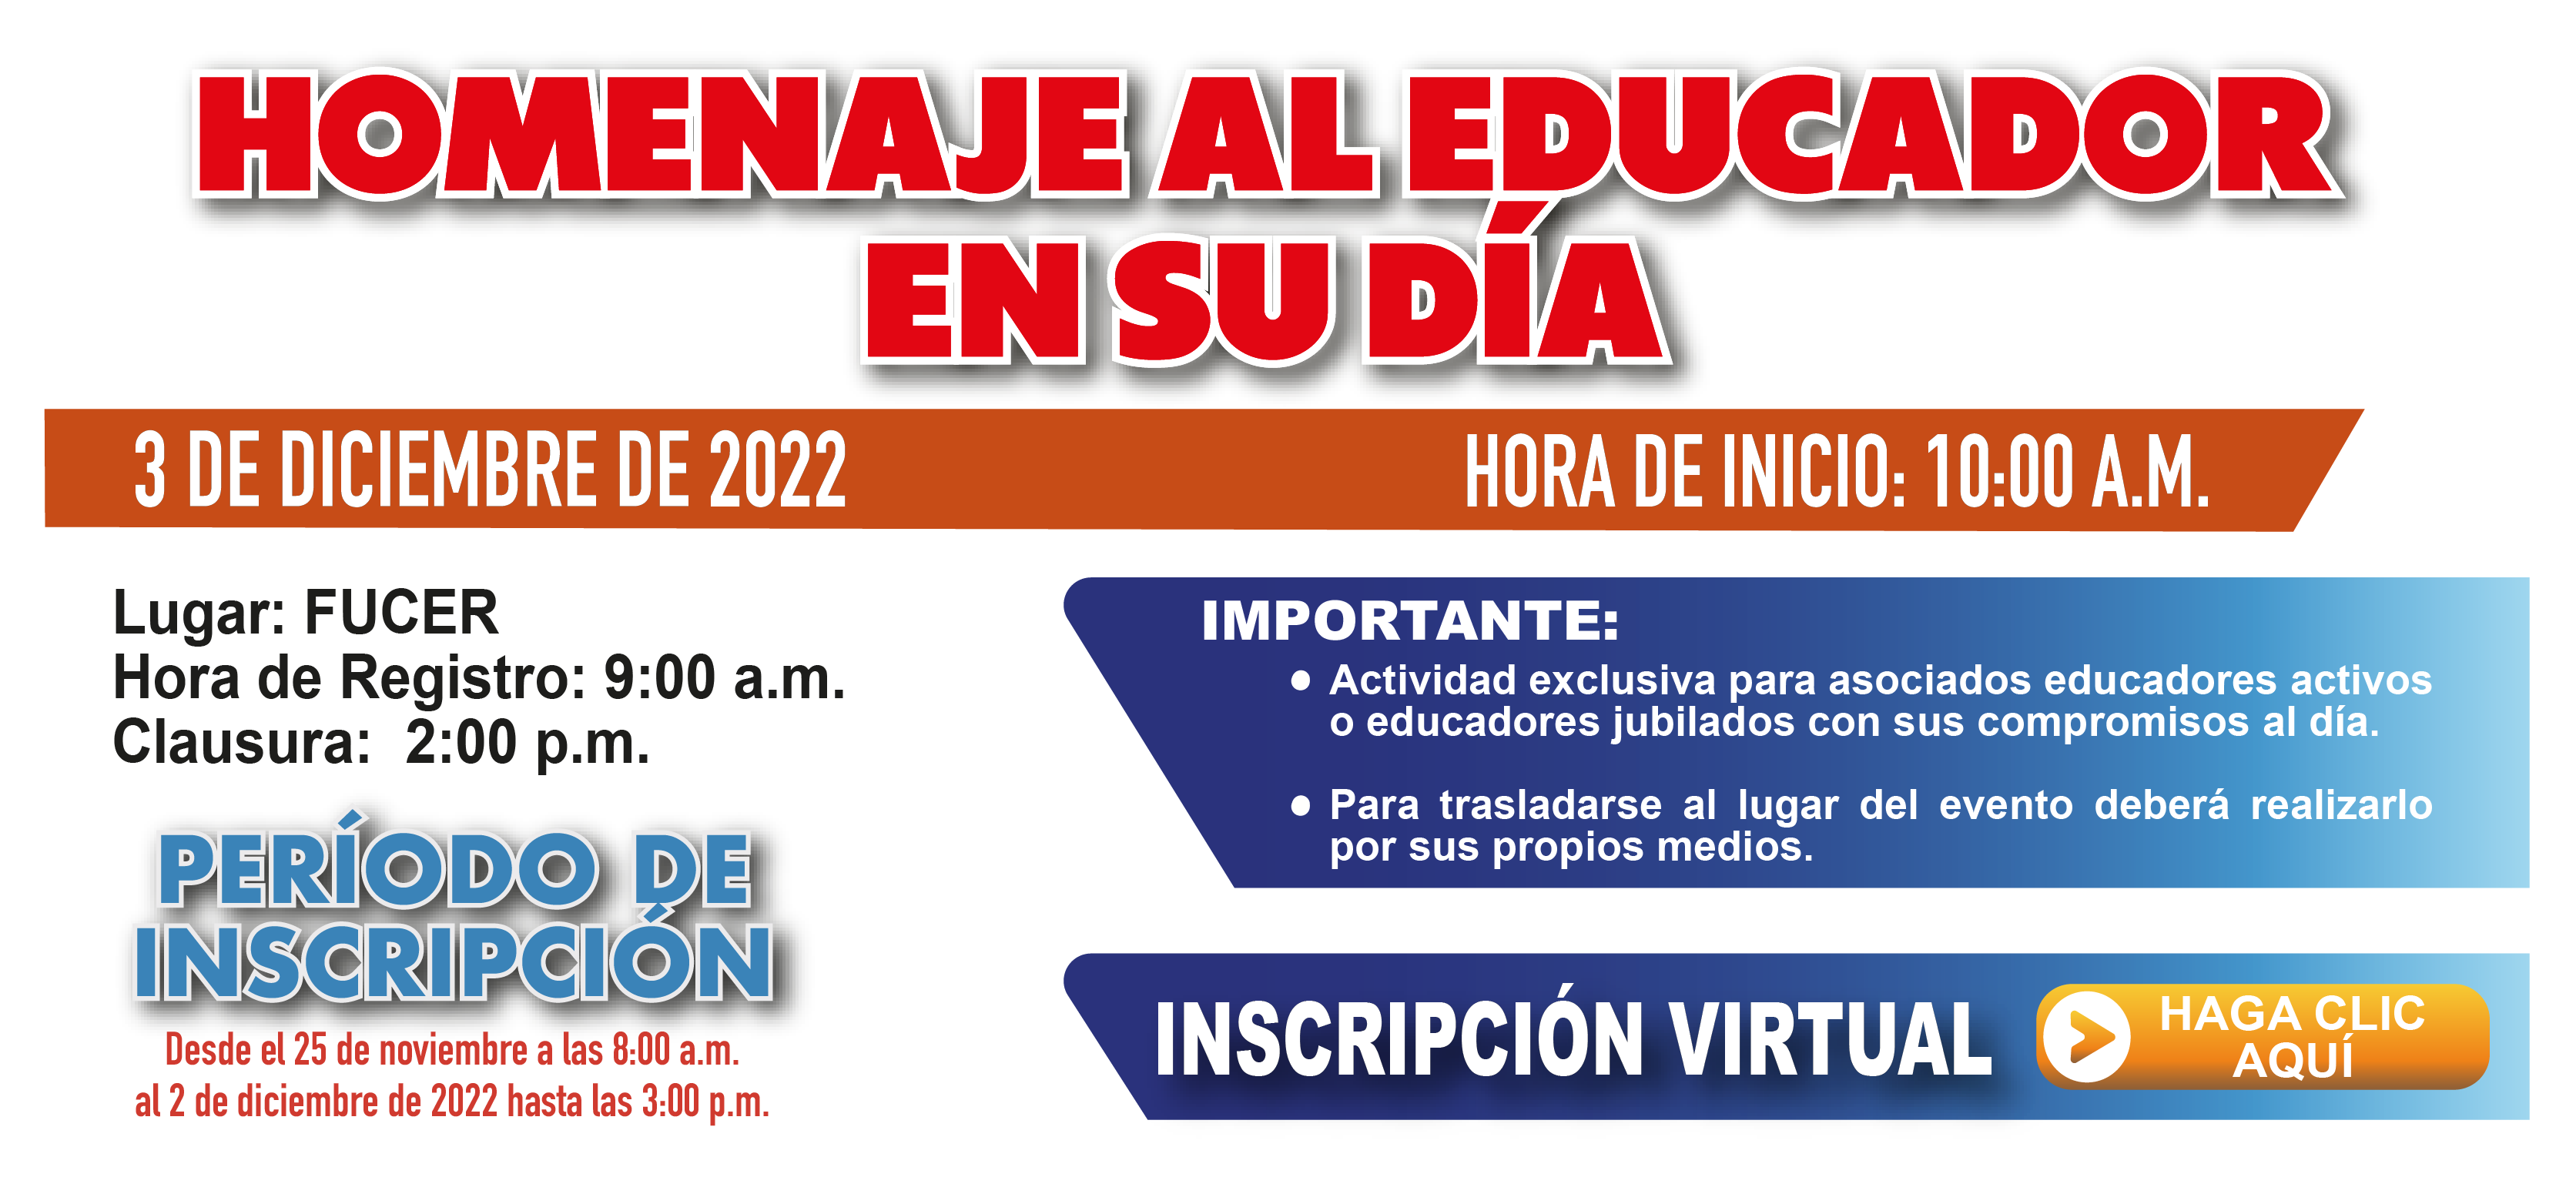 banner dia Dia Educador pag web 2 2022 copia